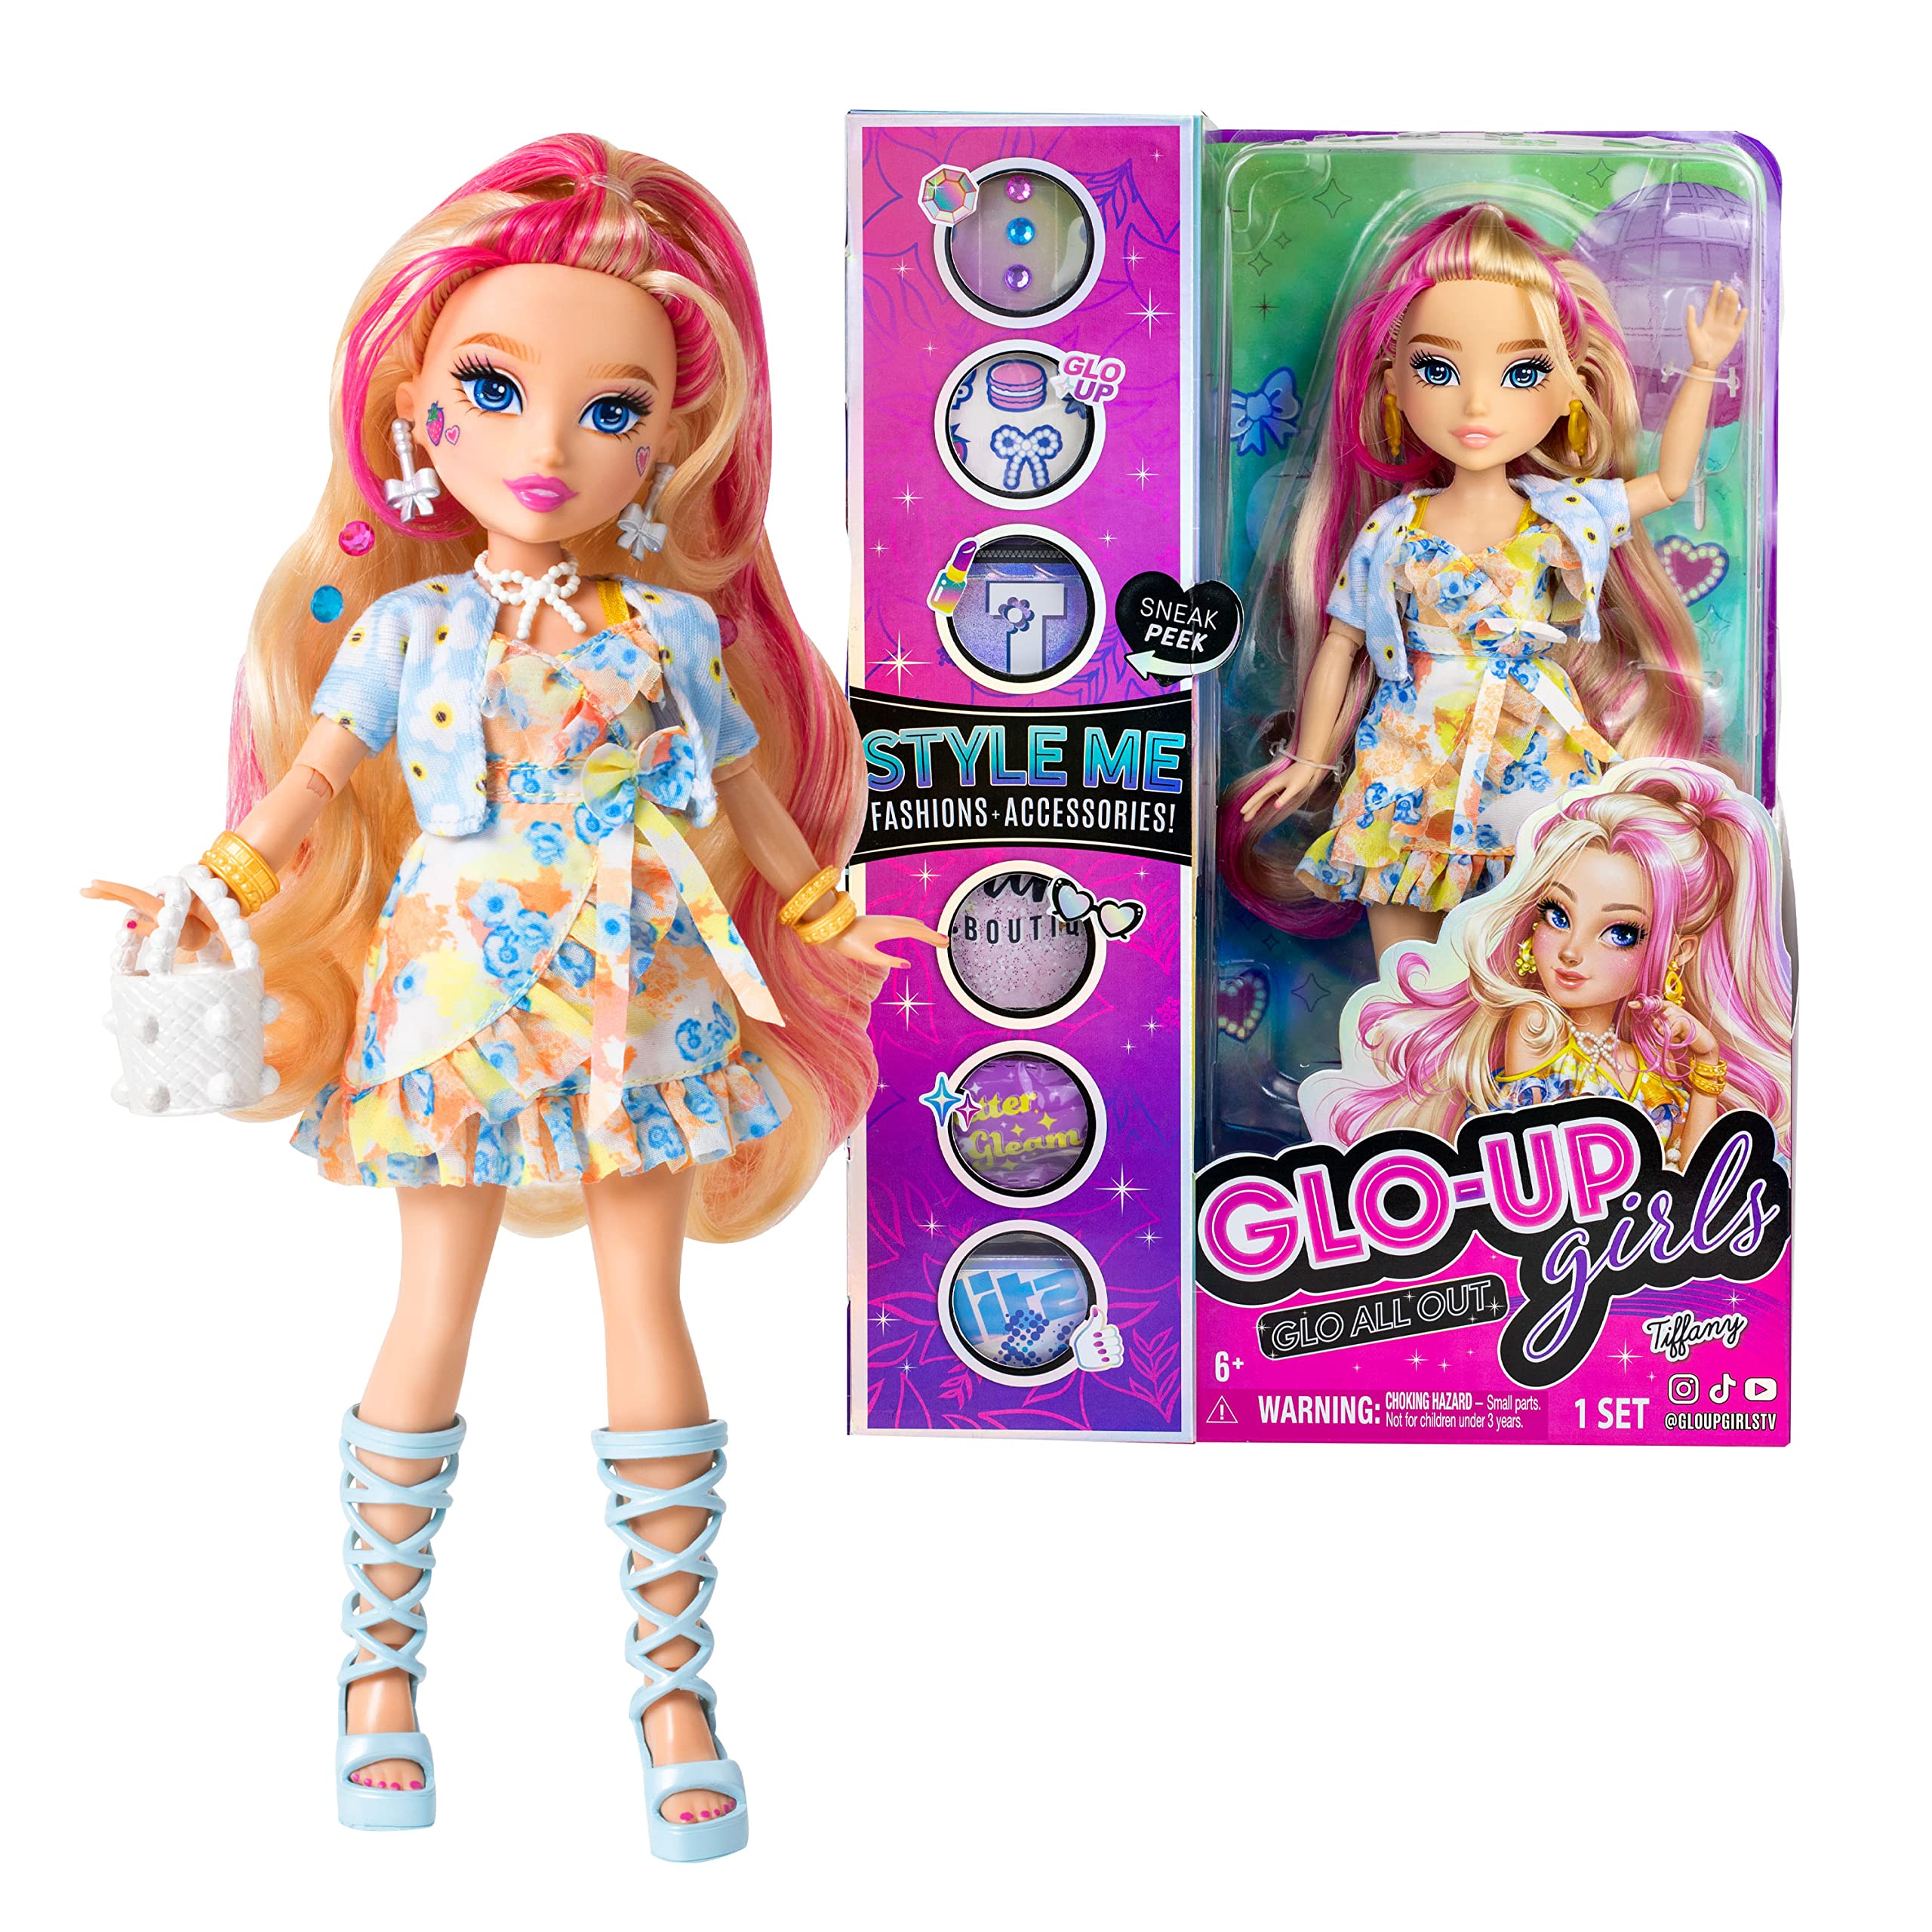 Far Out Toys GLO-UP - Muñeca de moda rubia Tiffany para niñas, joyas deslumbrantes, gemas para el cabello, accesorios, moda, calcomanías faciales, maquillaje, uñas